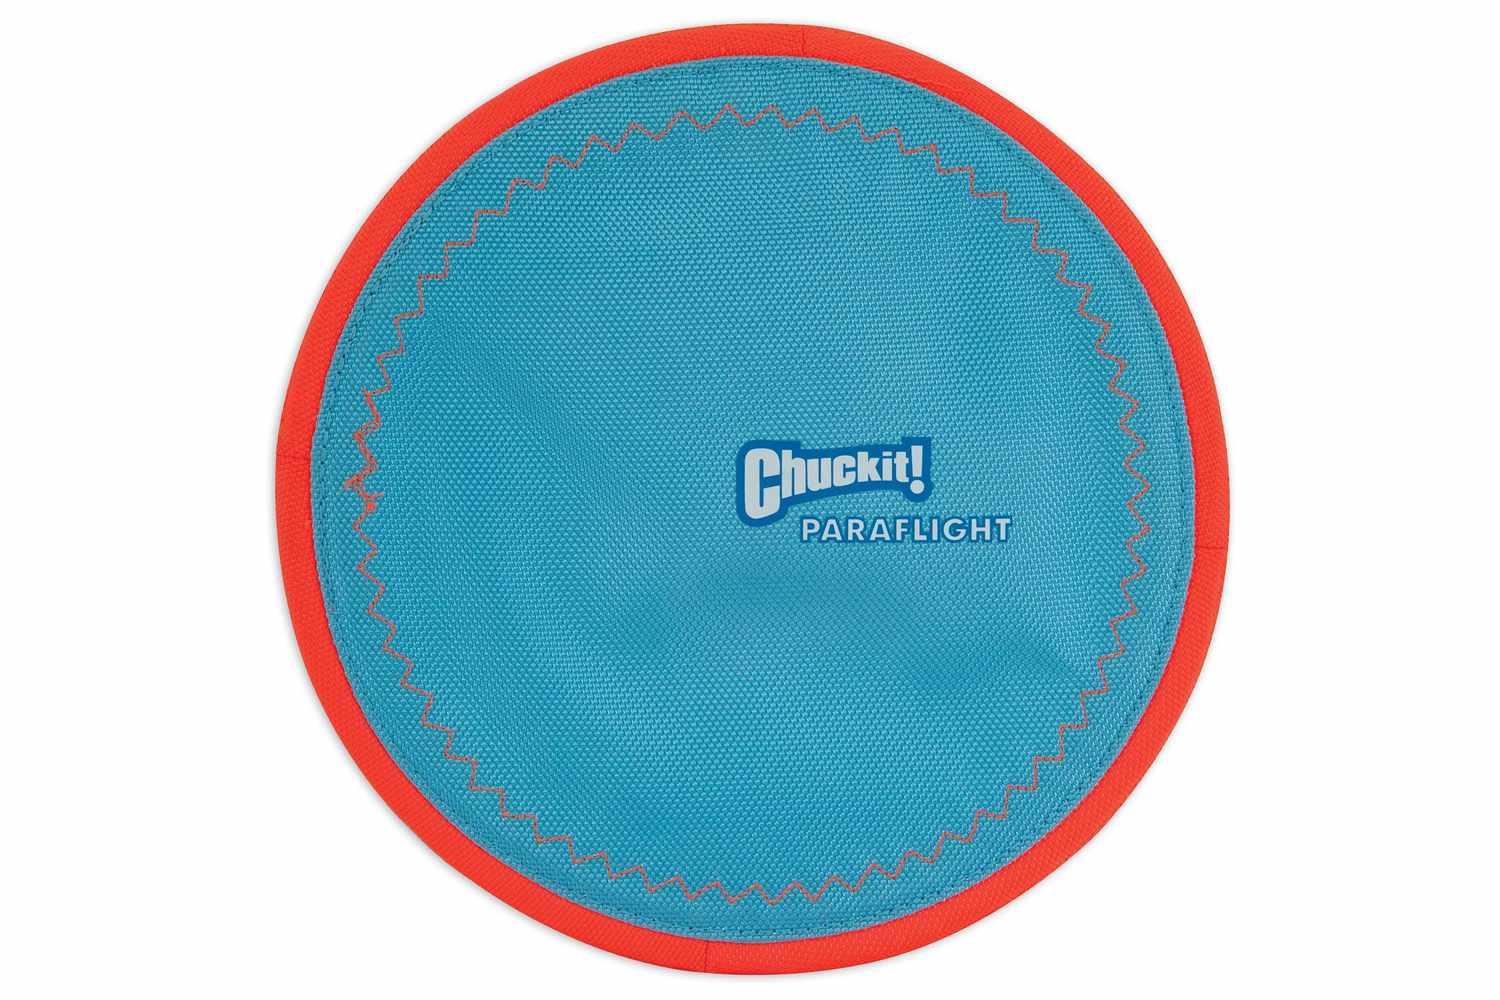 Chuckit Paraflight Frisbee